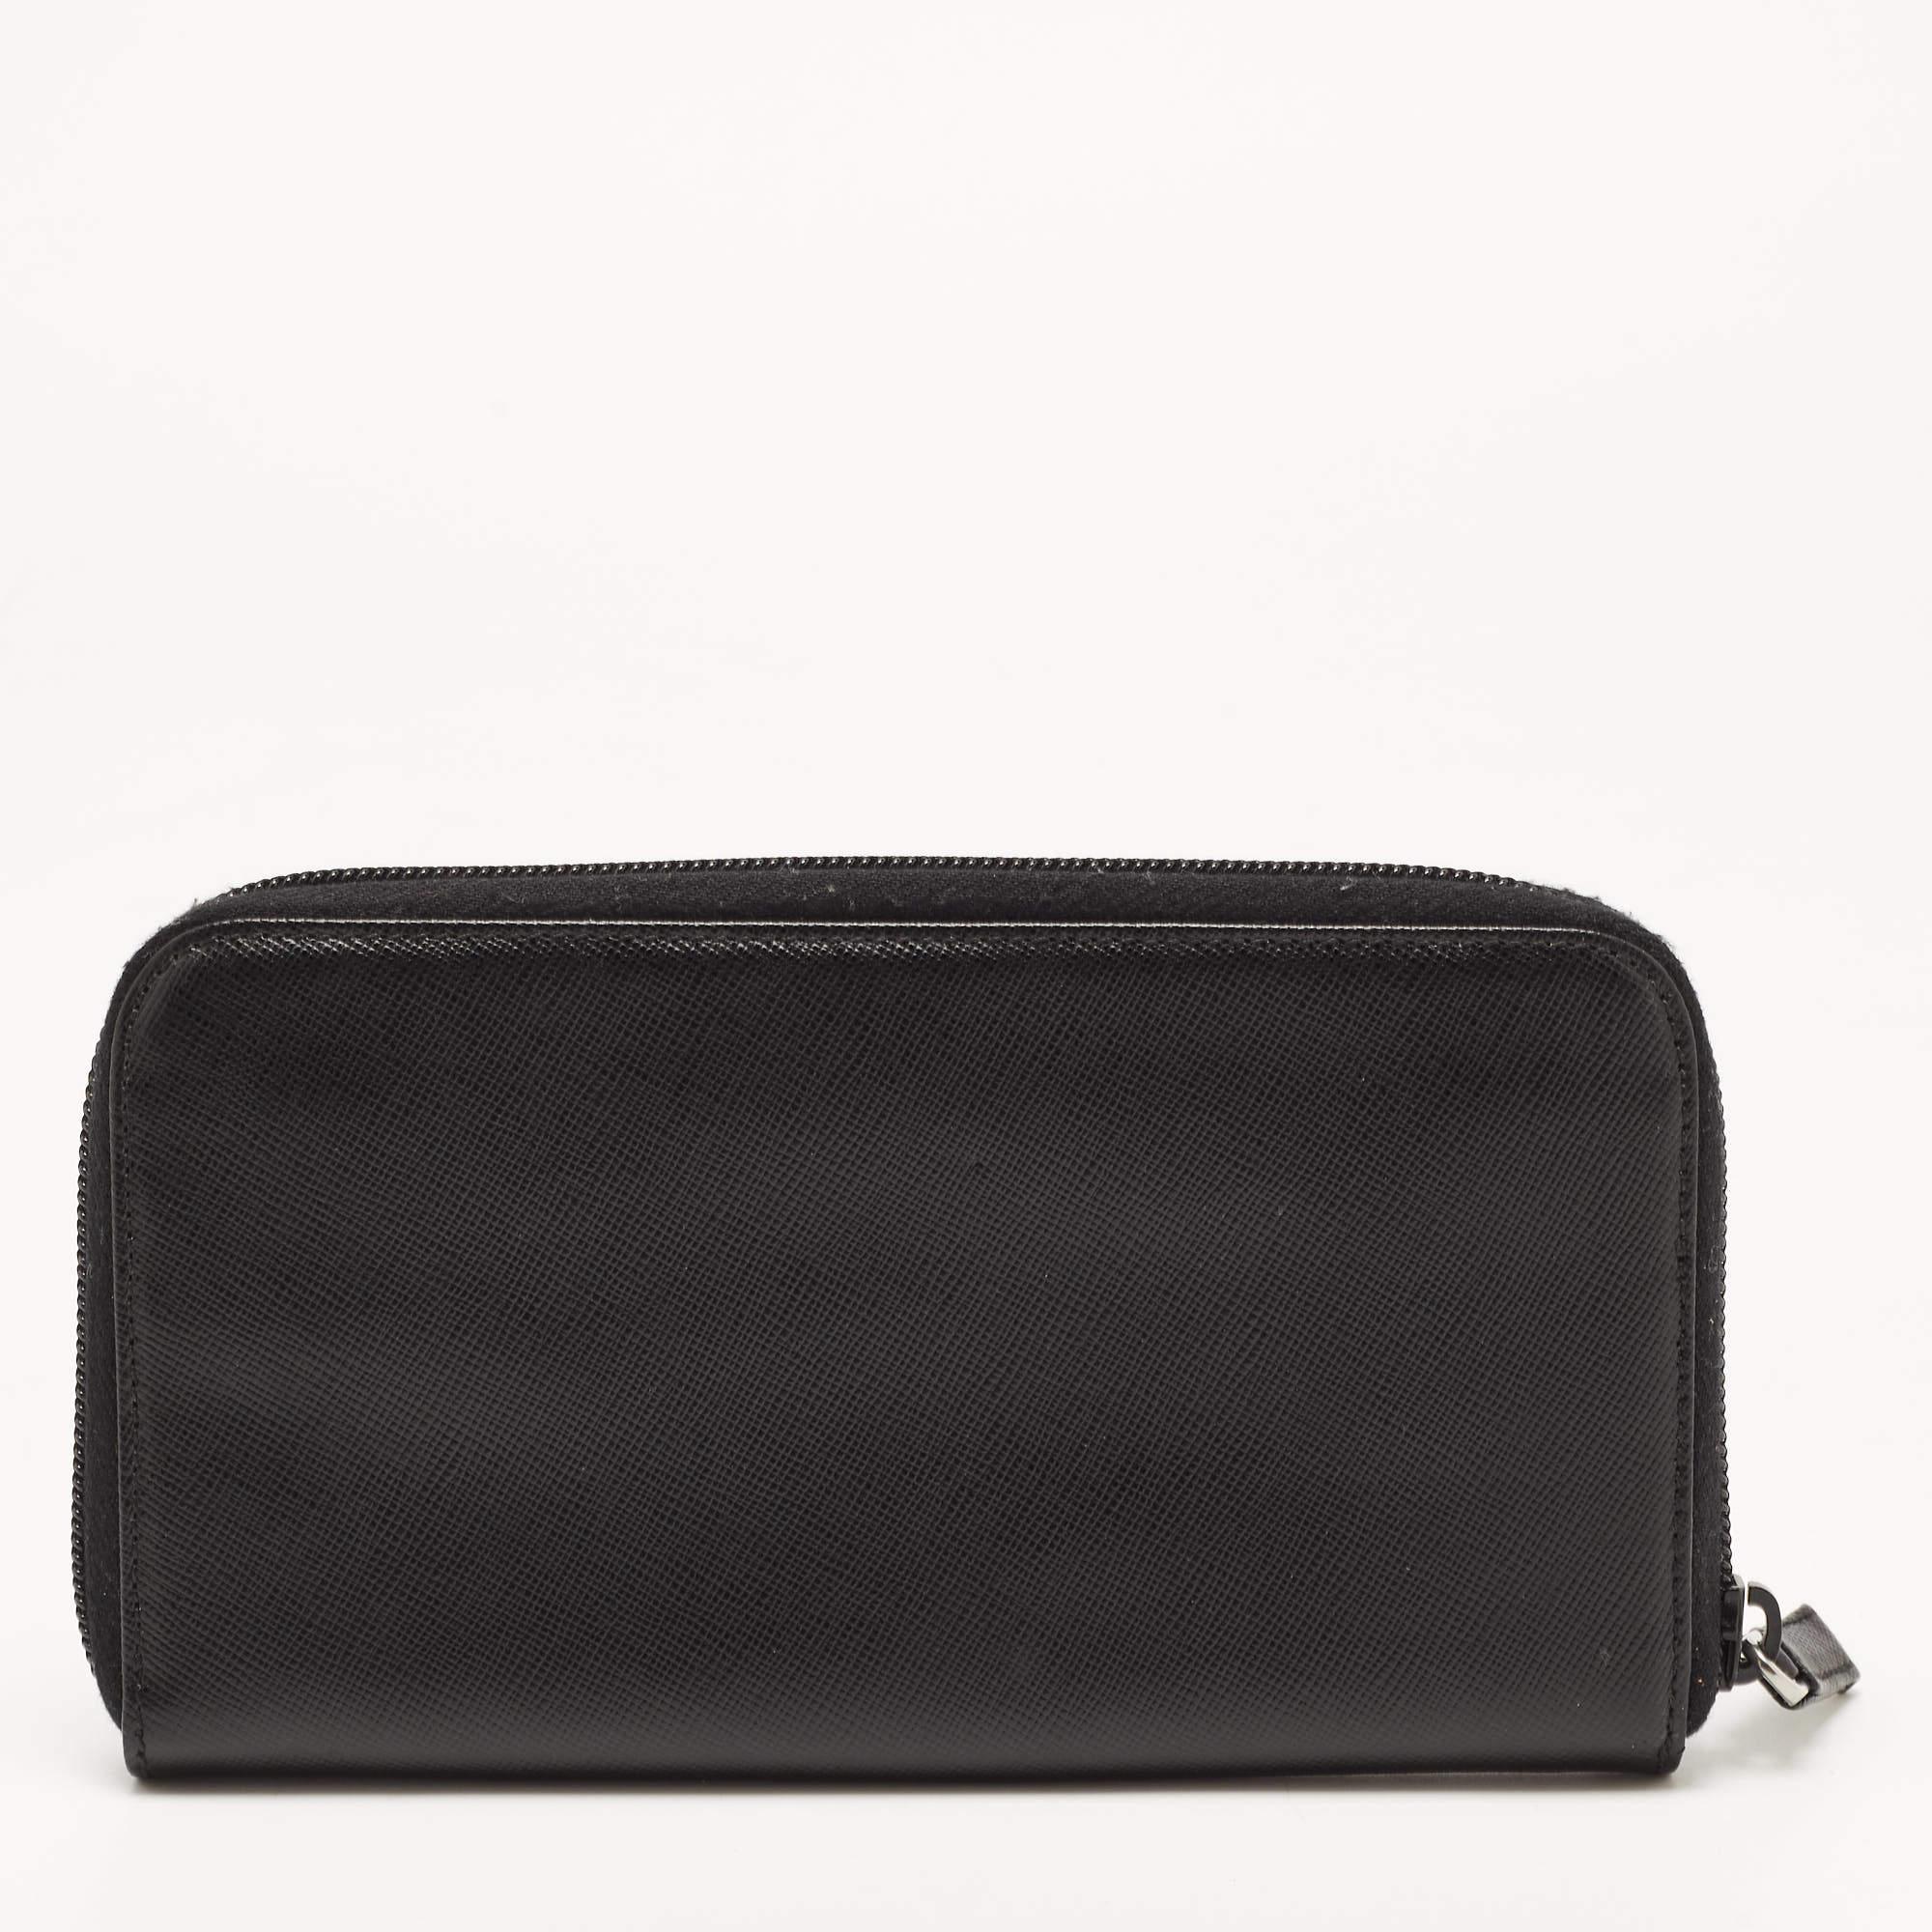 Prada Black Saffiano Metal Leather Zip Around Wallet 2